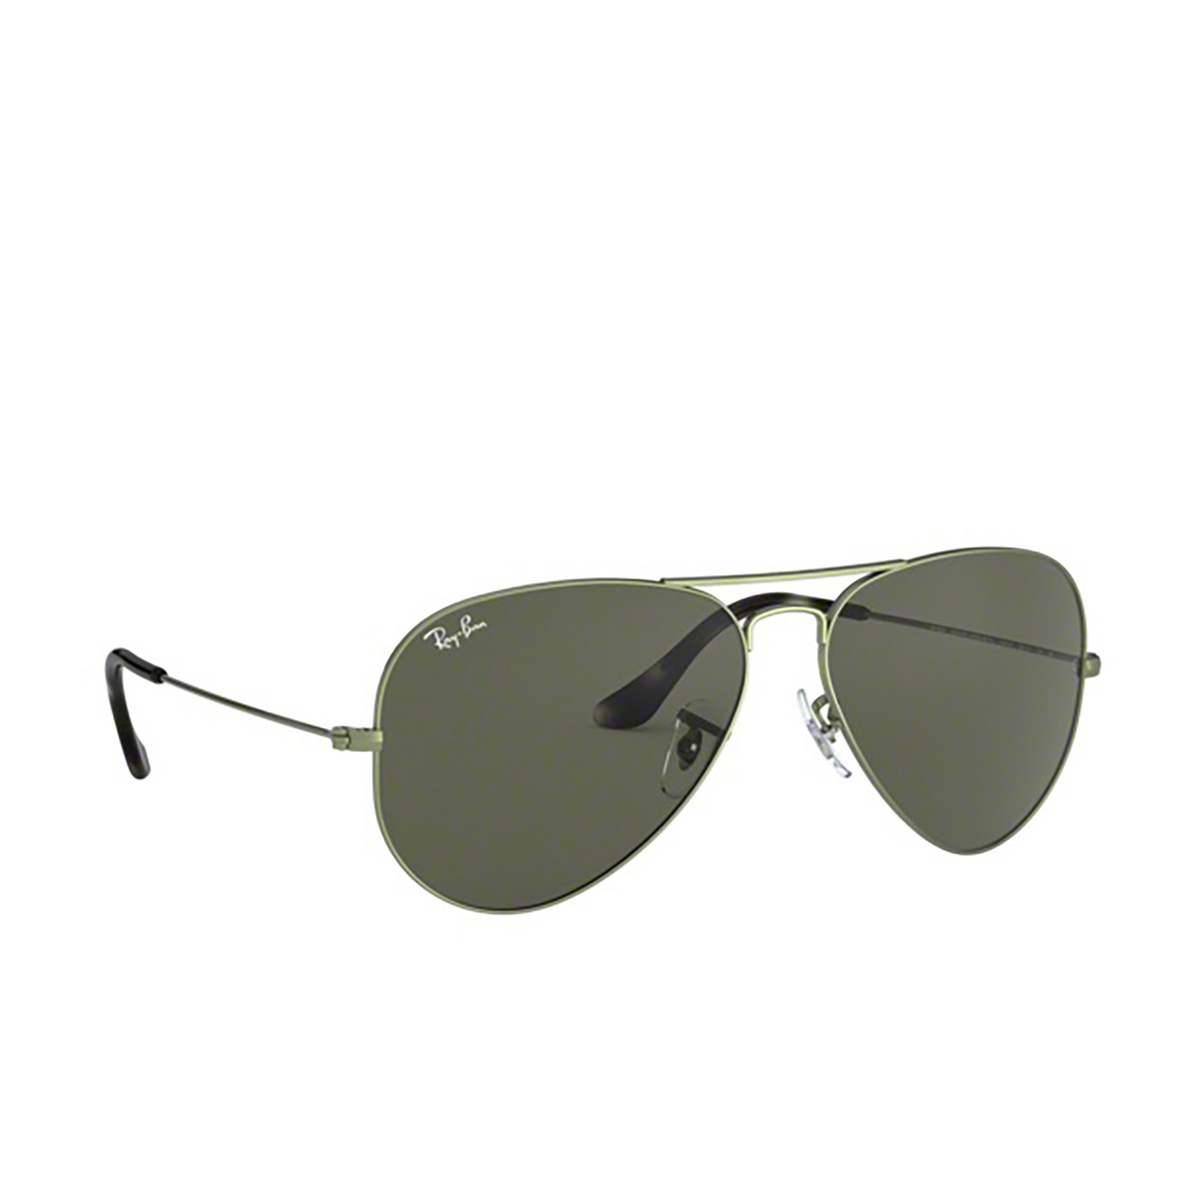 Ray-Ban AVIATOR LARGE METAL Sunglasses 919131 Sand Transparent Green - three-quarters view